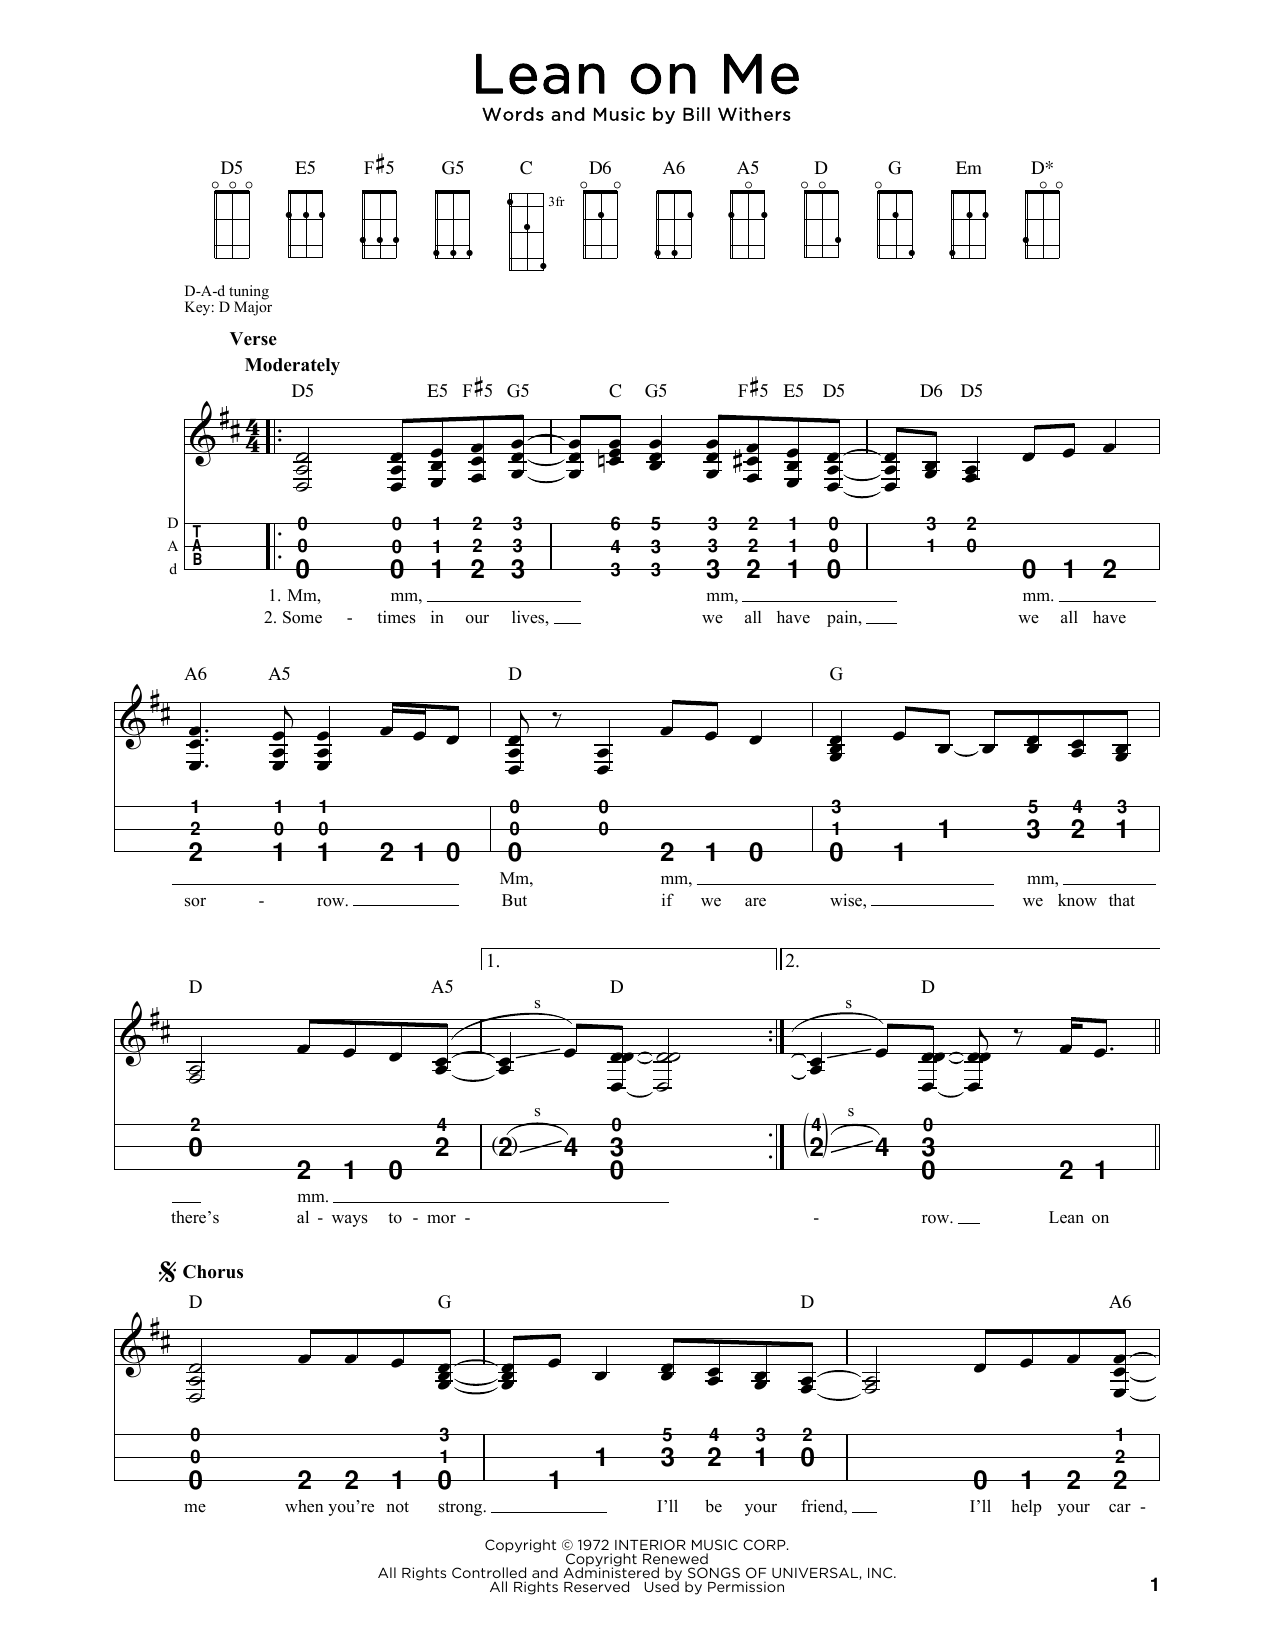 Bill Withers Lean On Me (arr. Steven B. Eulberg) Sheet Music Notes & Chords for Dulcimer - Download or Print PDF